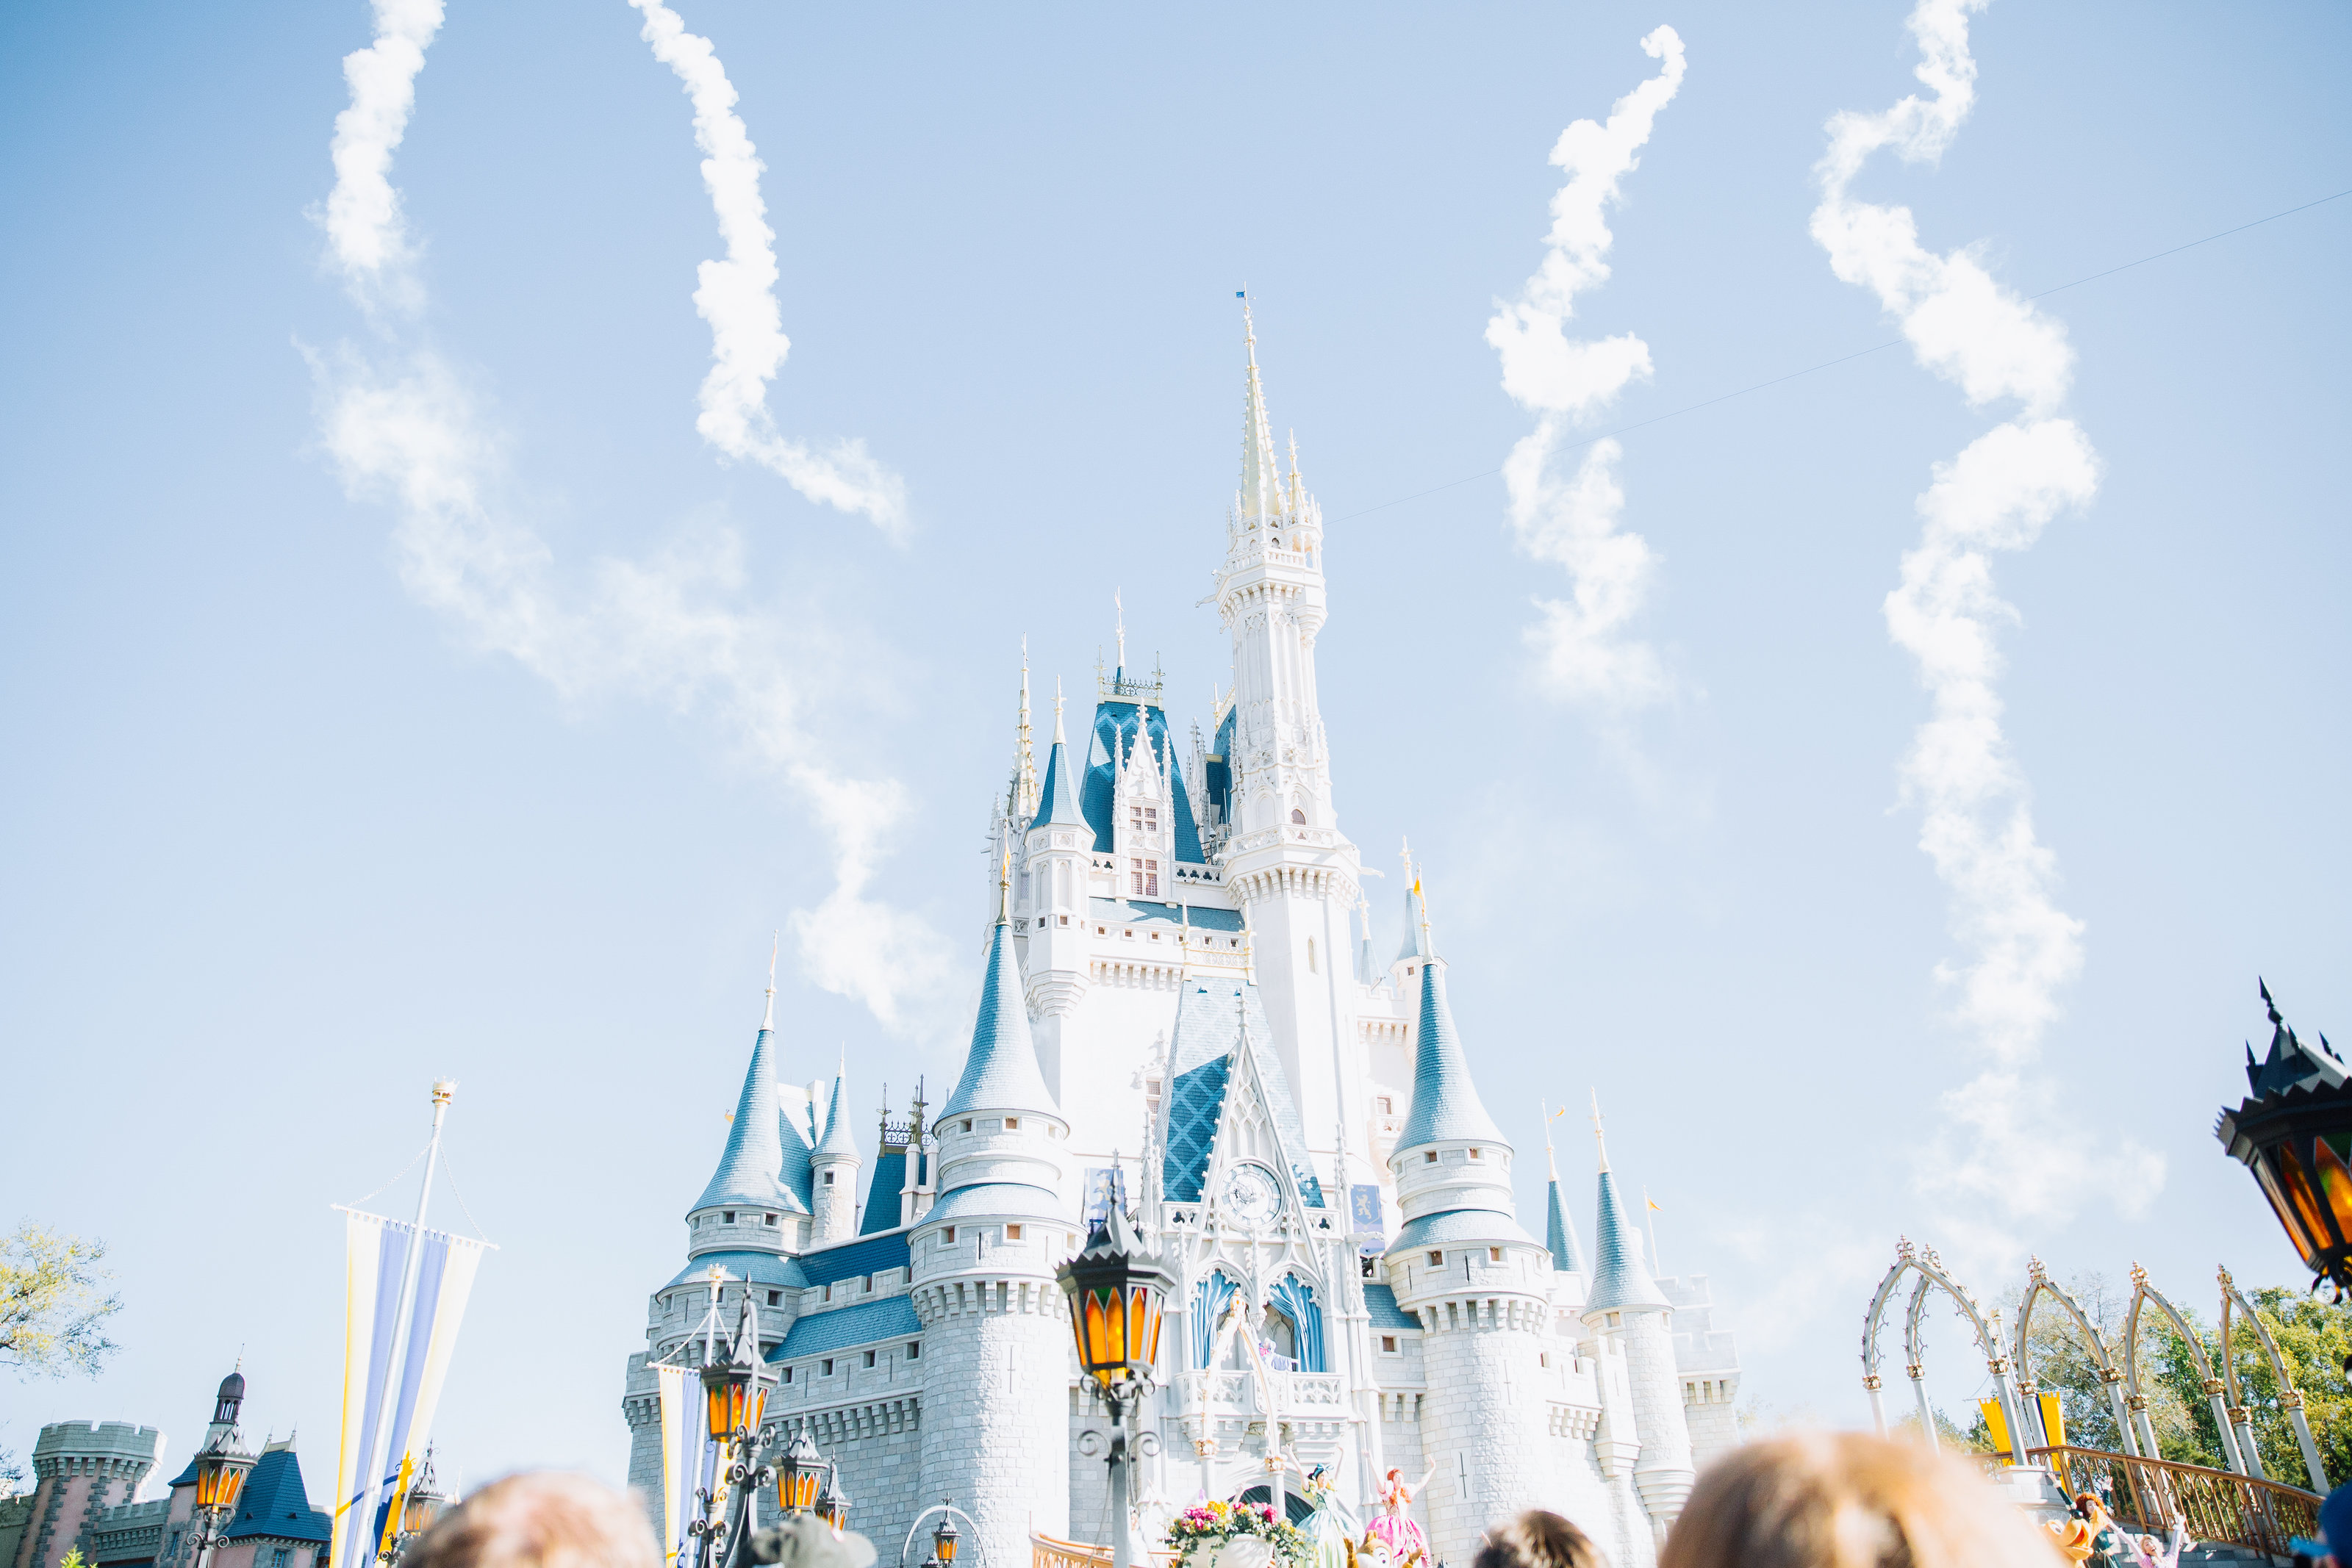 Disney's Cinderella Castle at Magic Kingdom